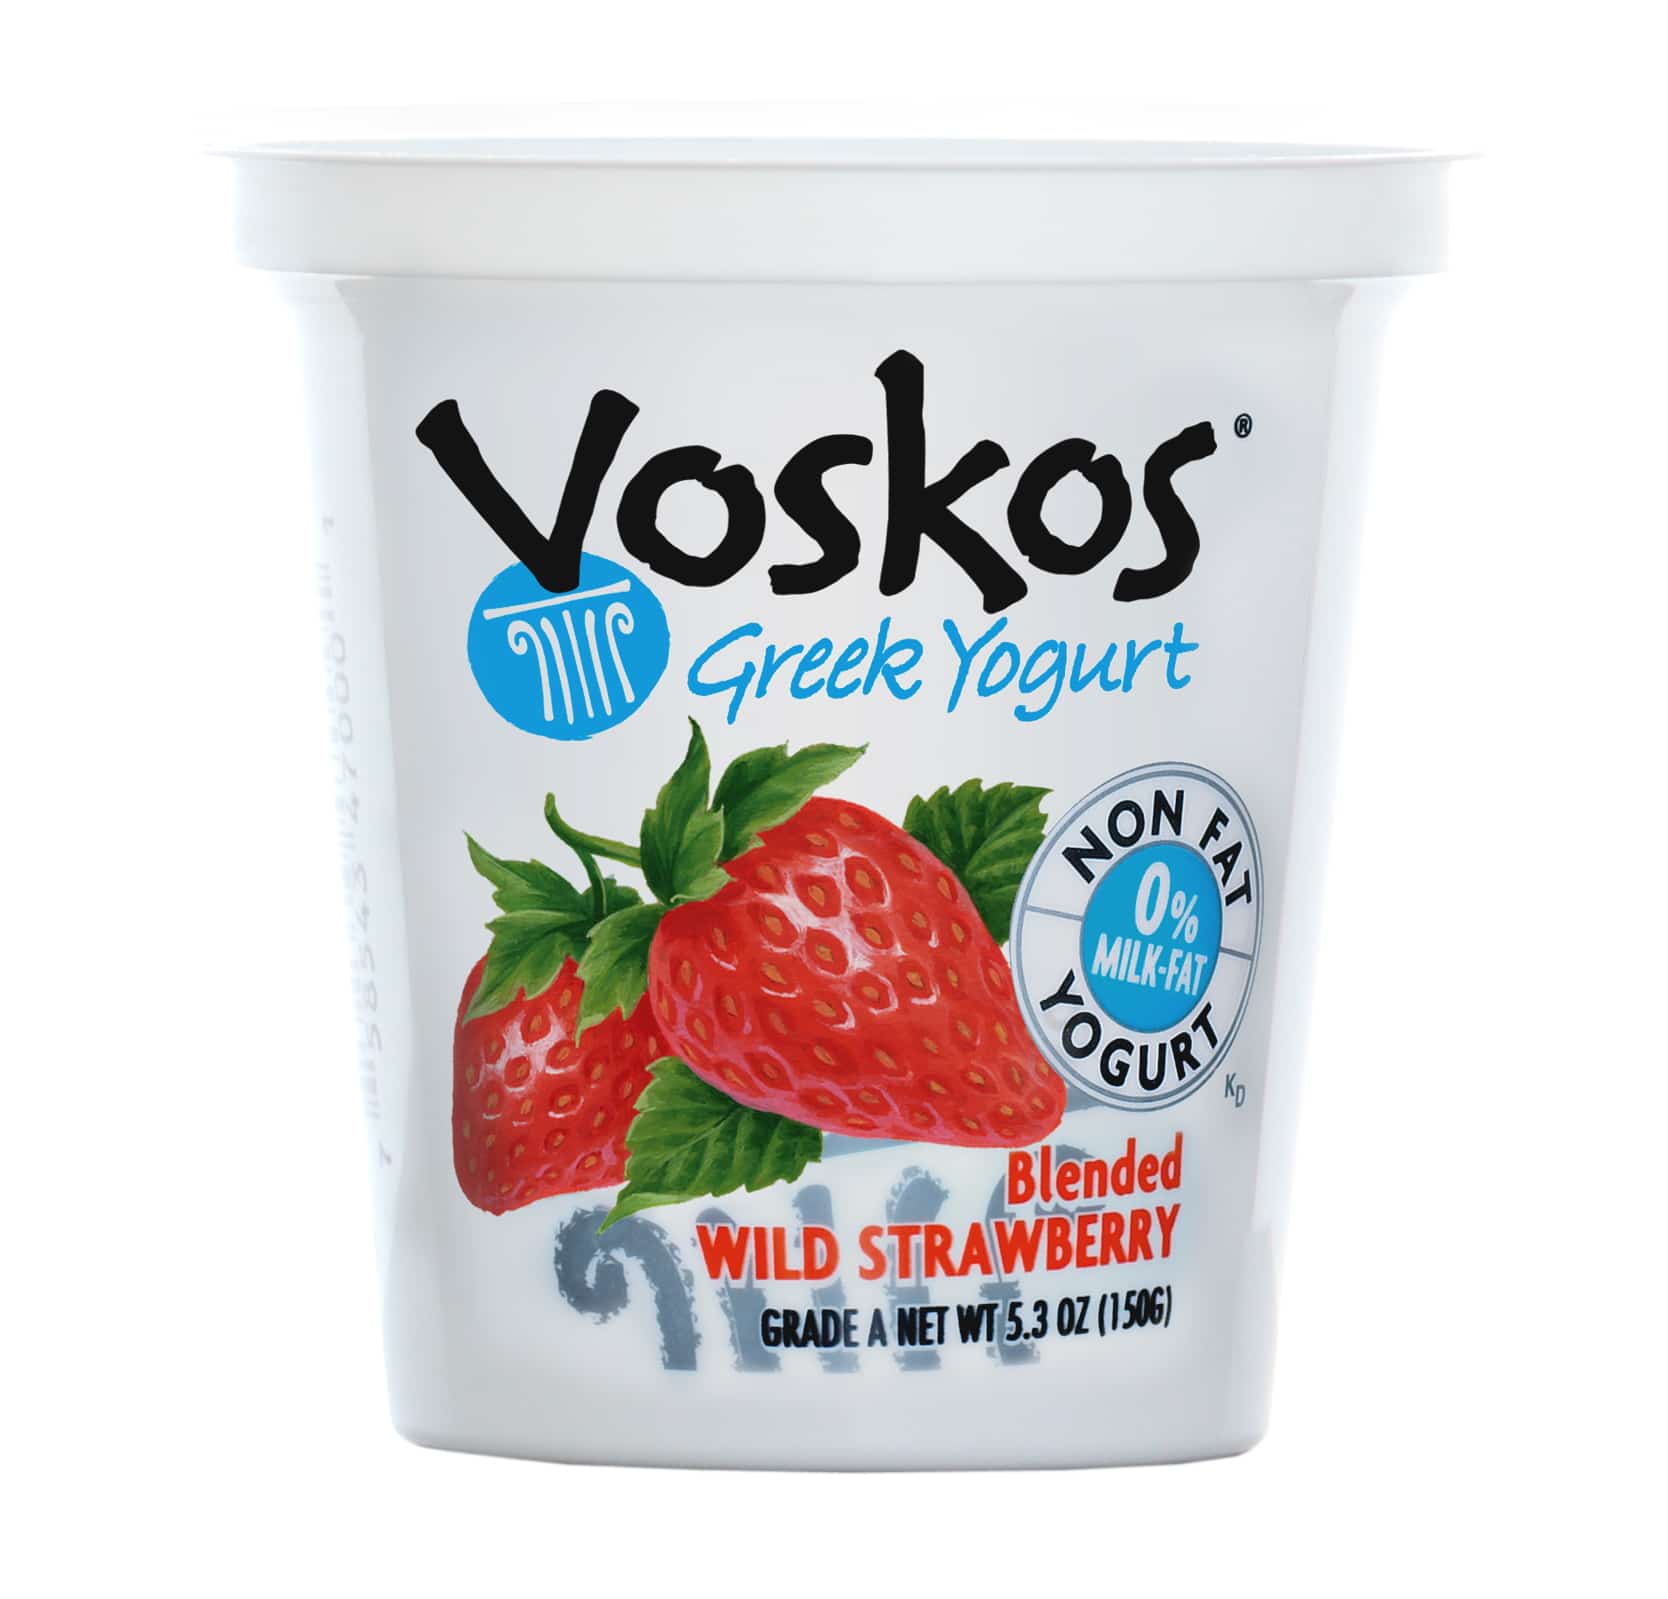 Voskos Greek Yogurt Offers New Snack Recipe: A No